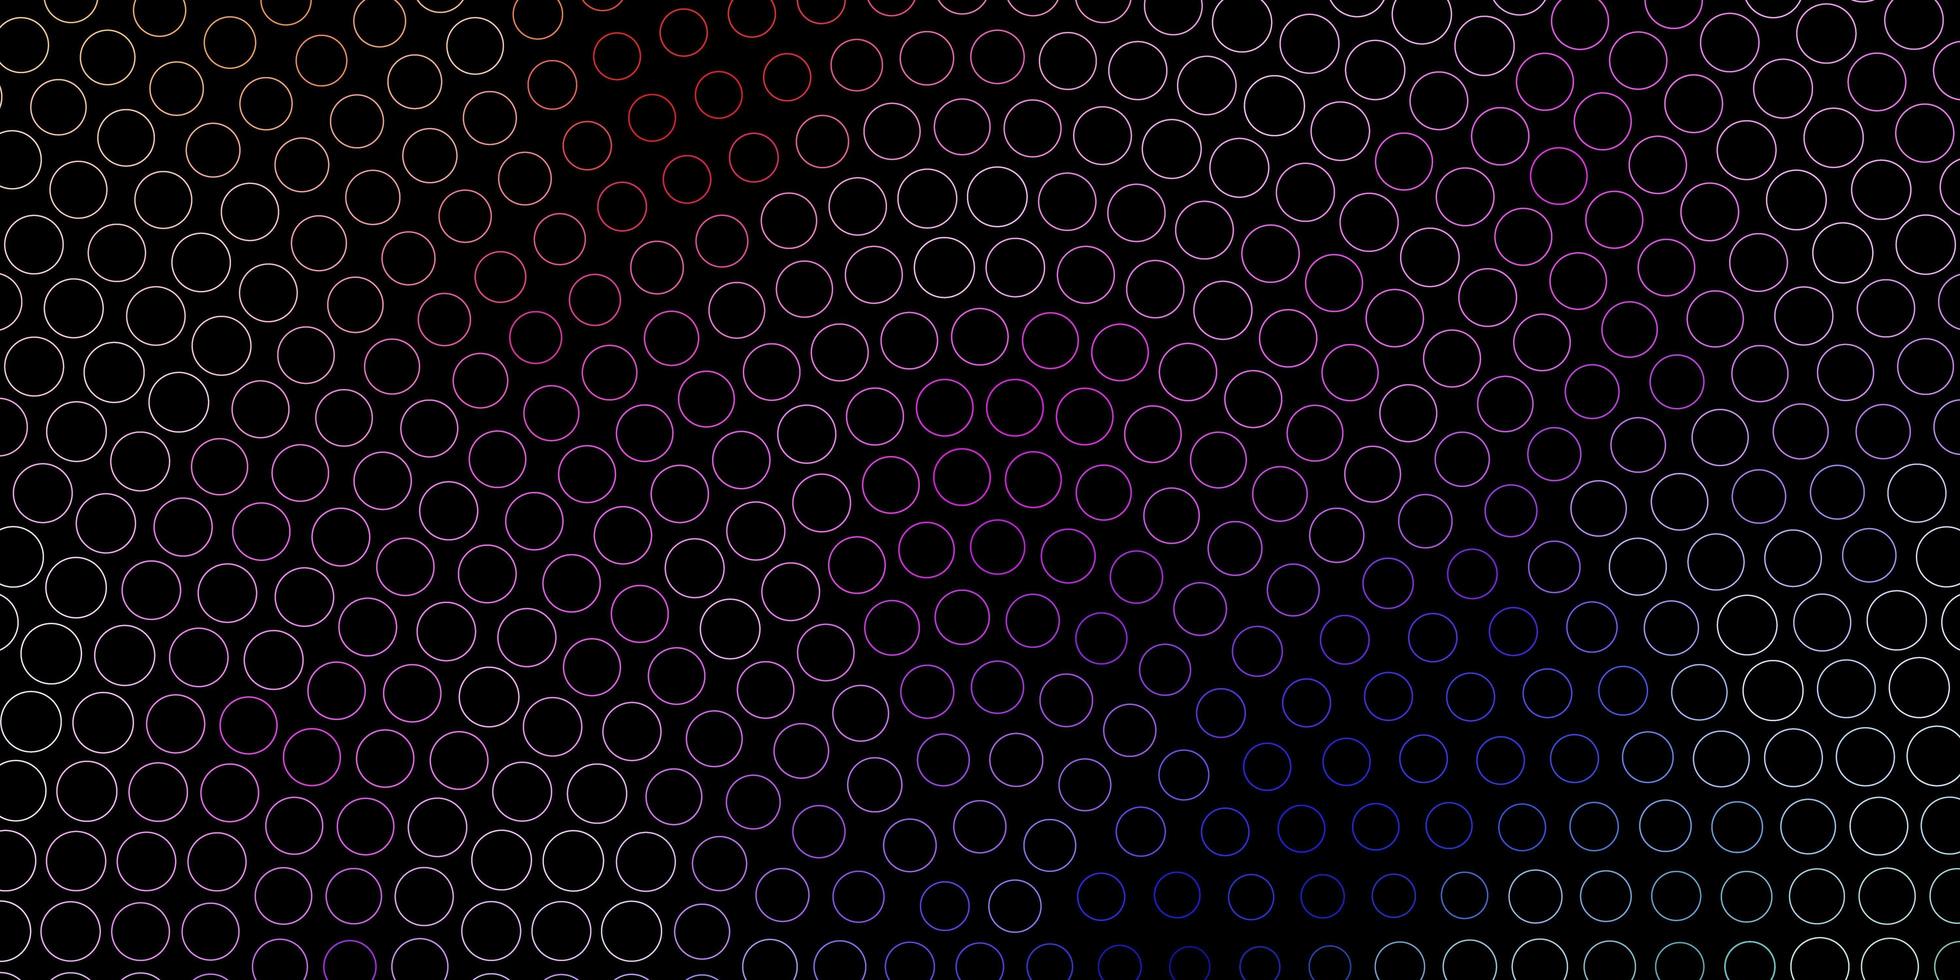 Dark Multicolor vector background with bubbles.